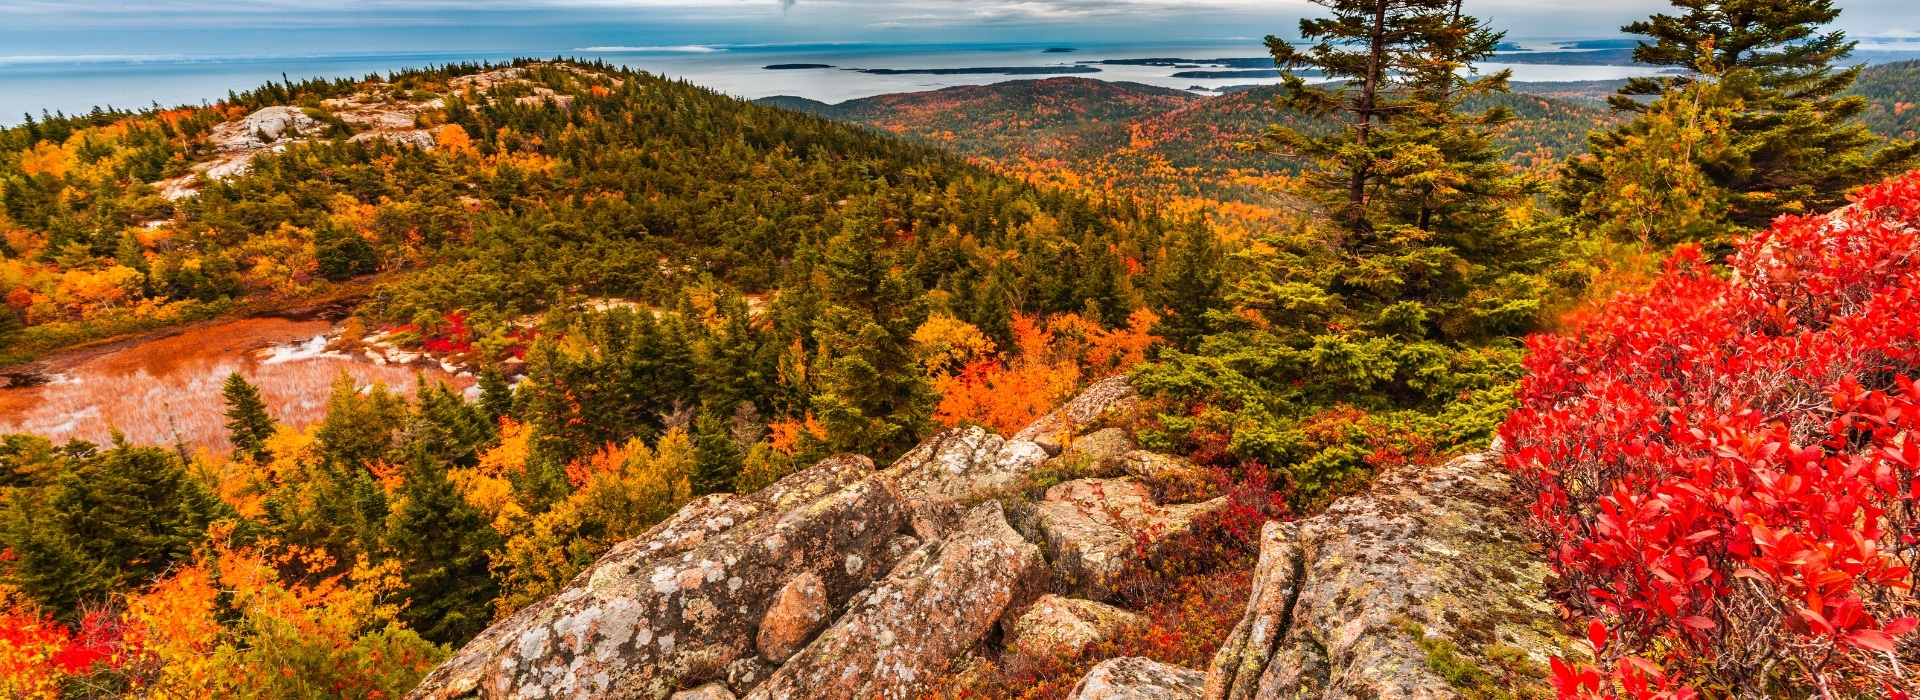 Fall foliage atop Cadillac Mountain in Acadia National Park Maine